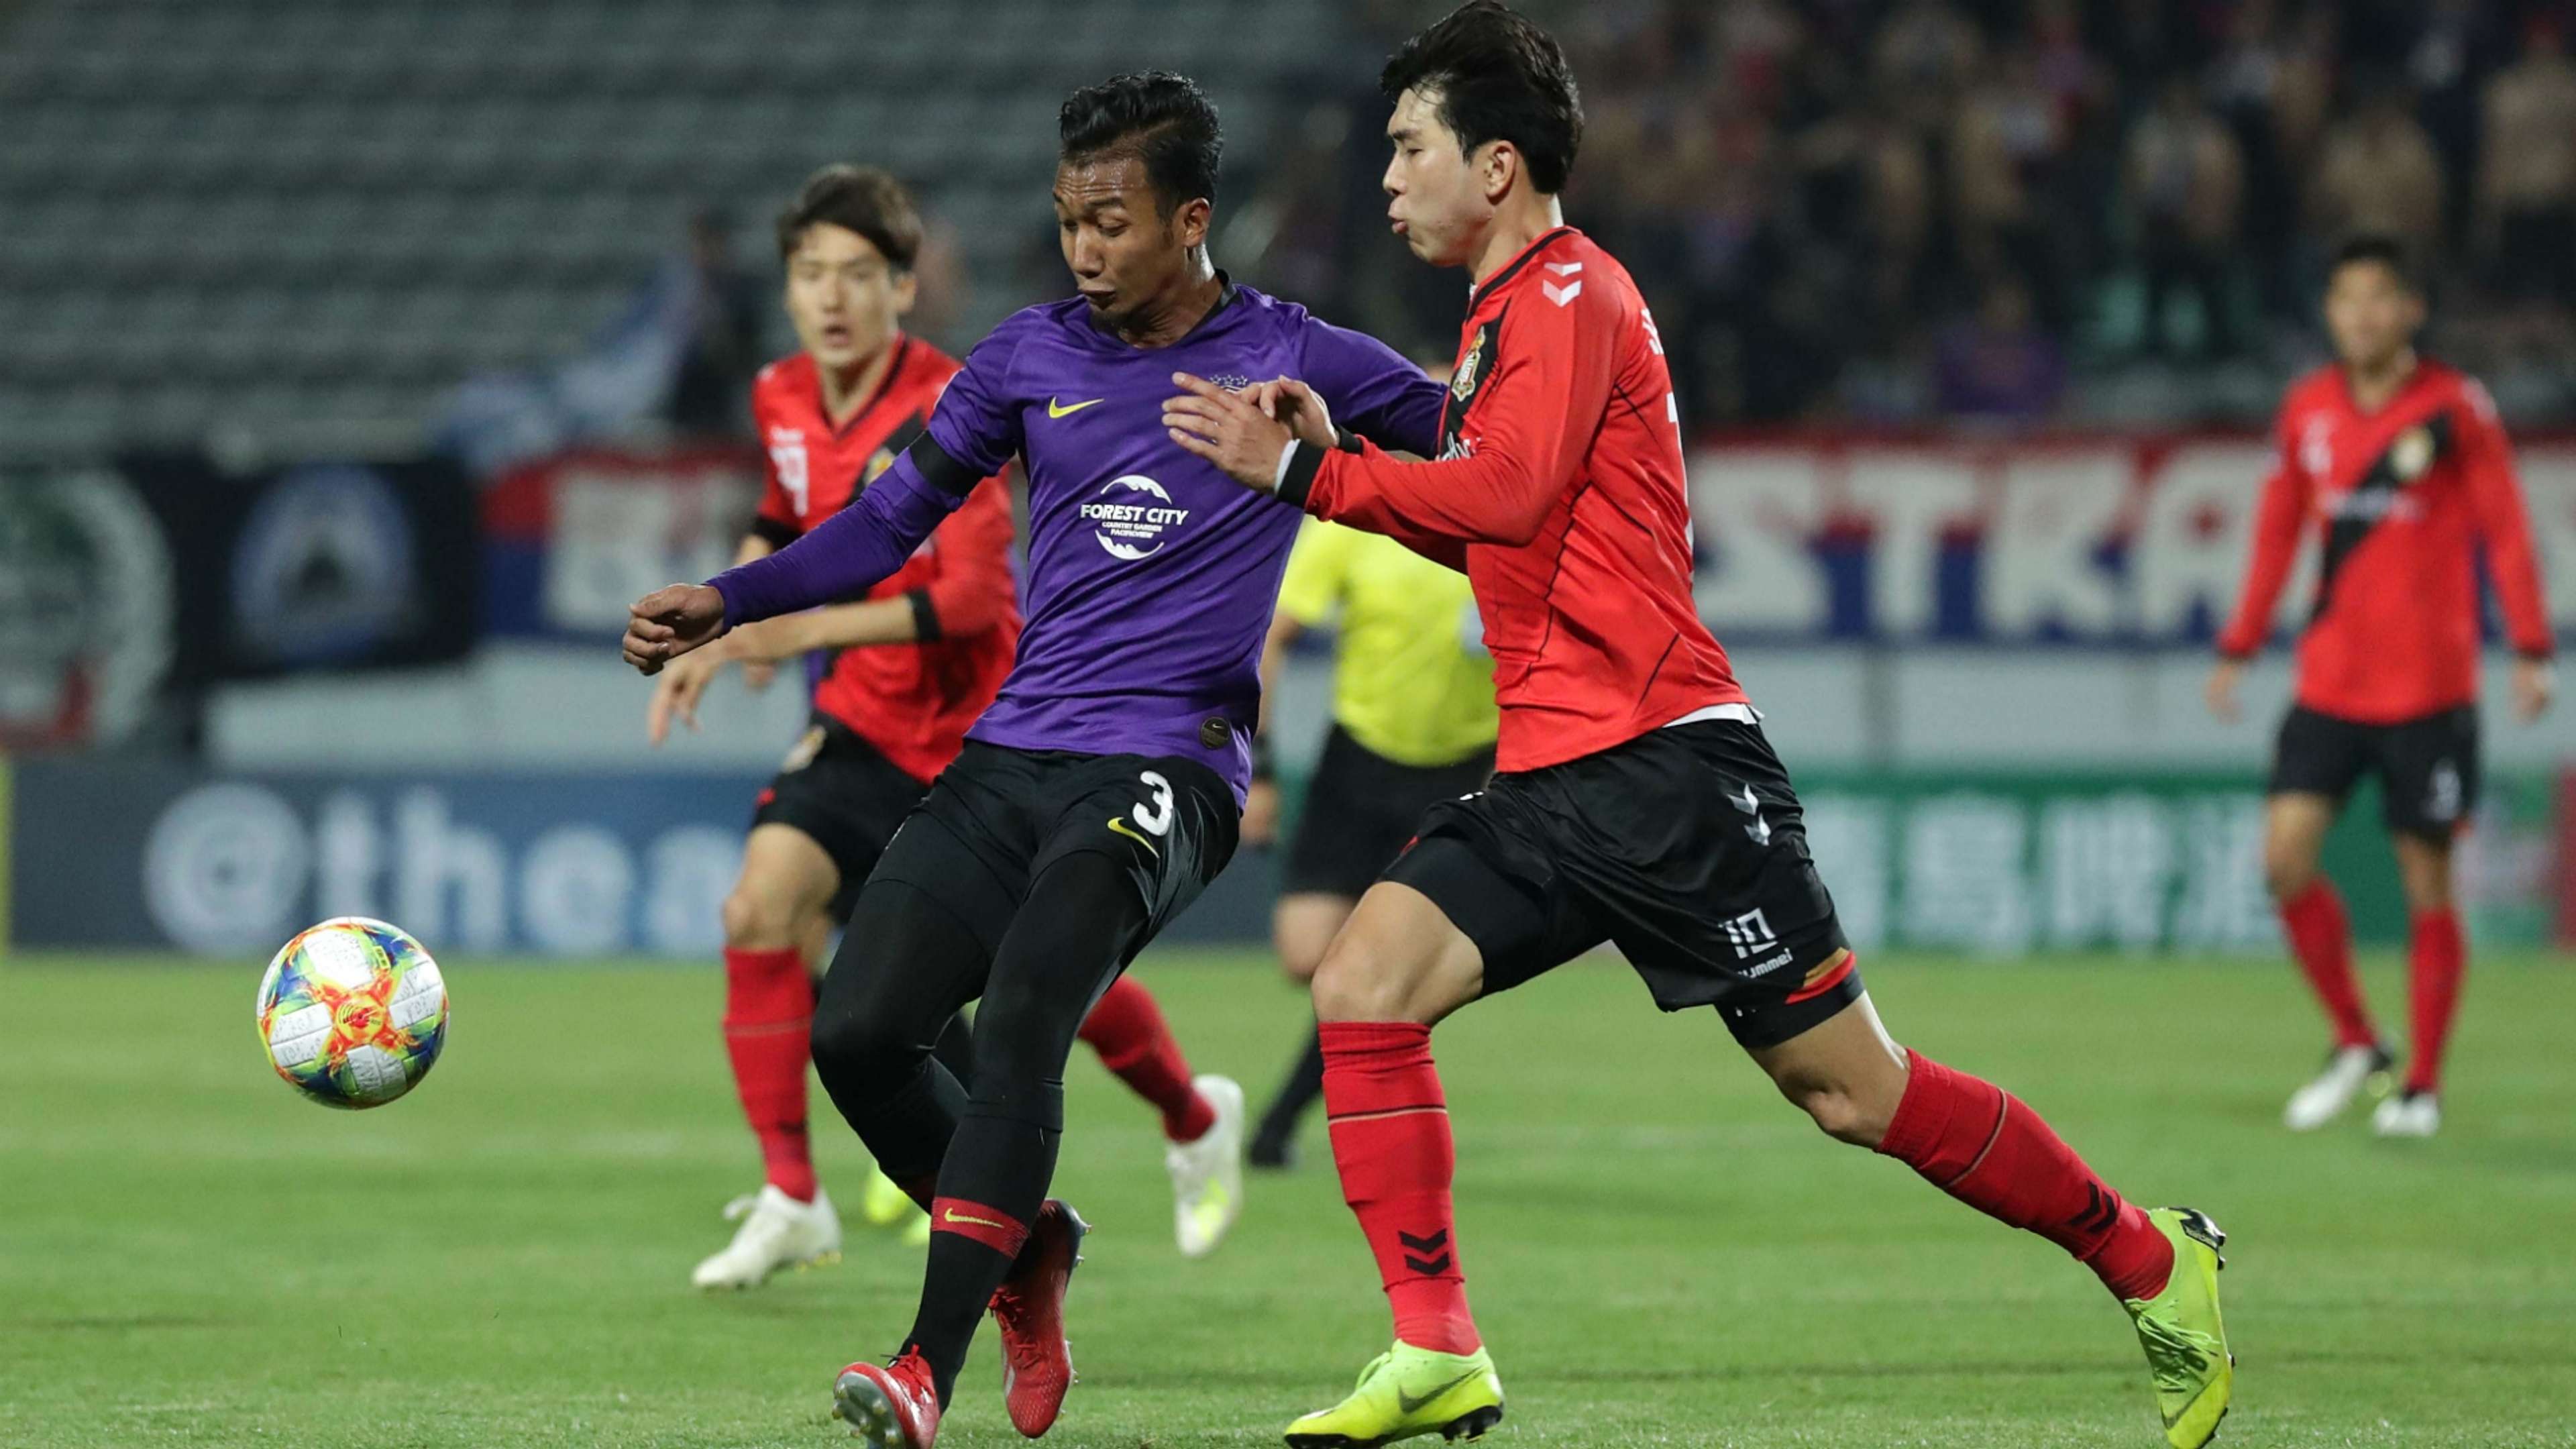 Adam Nor Azlin, Gyeongnam FC v Johor Darul Ta'zim, AFC Champions League, 22 May 2019